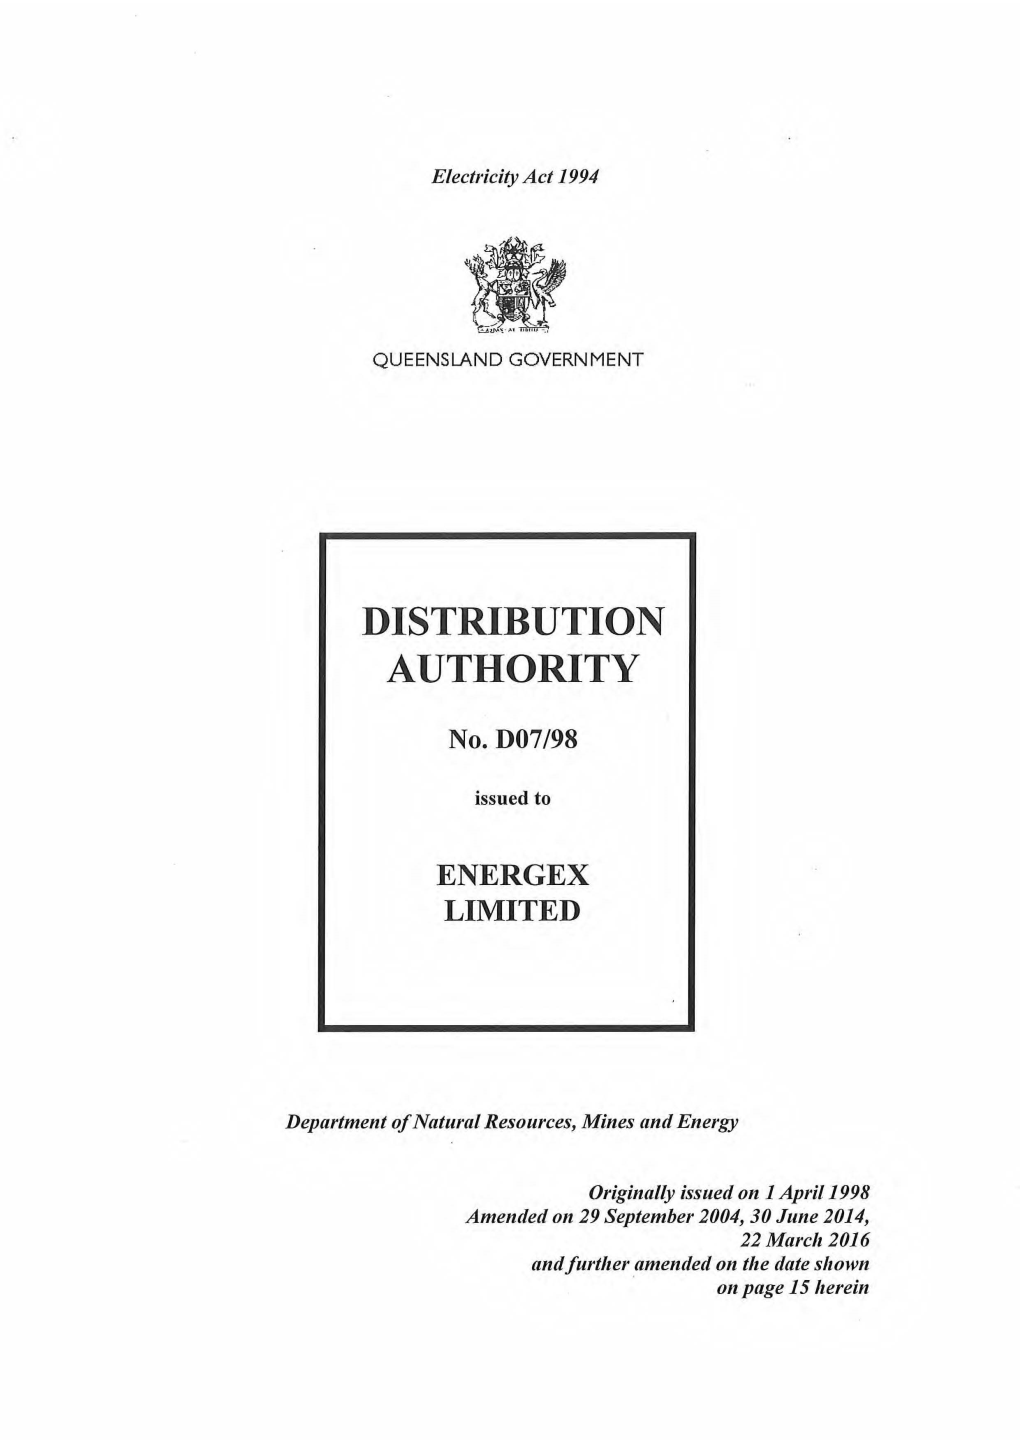 Distribution Authority